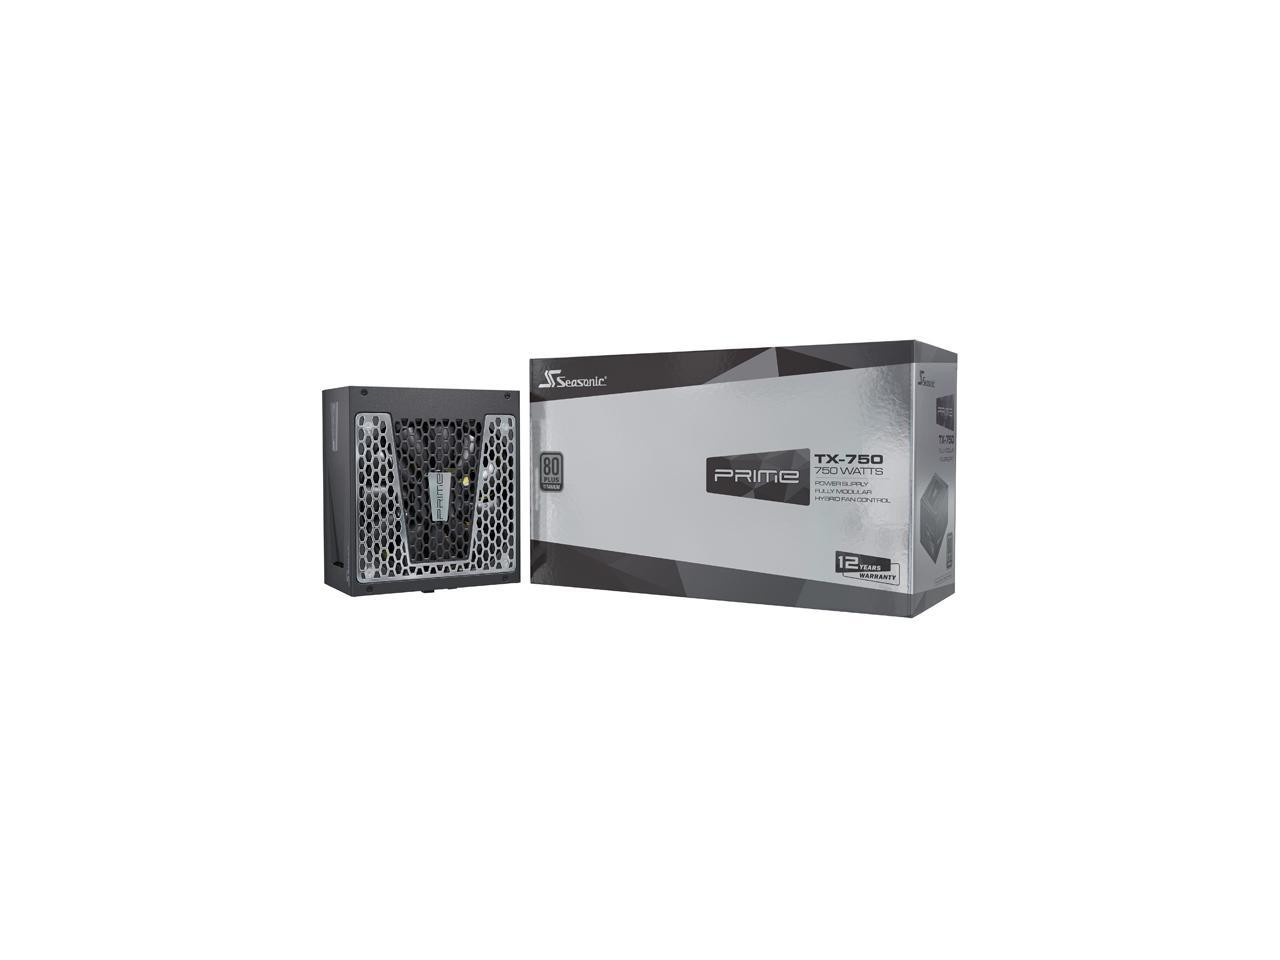 Seasonic Usa PRIMETX-750 Power Supply